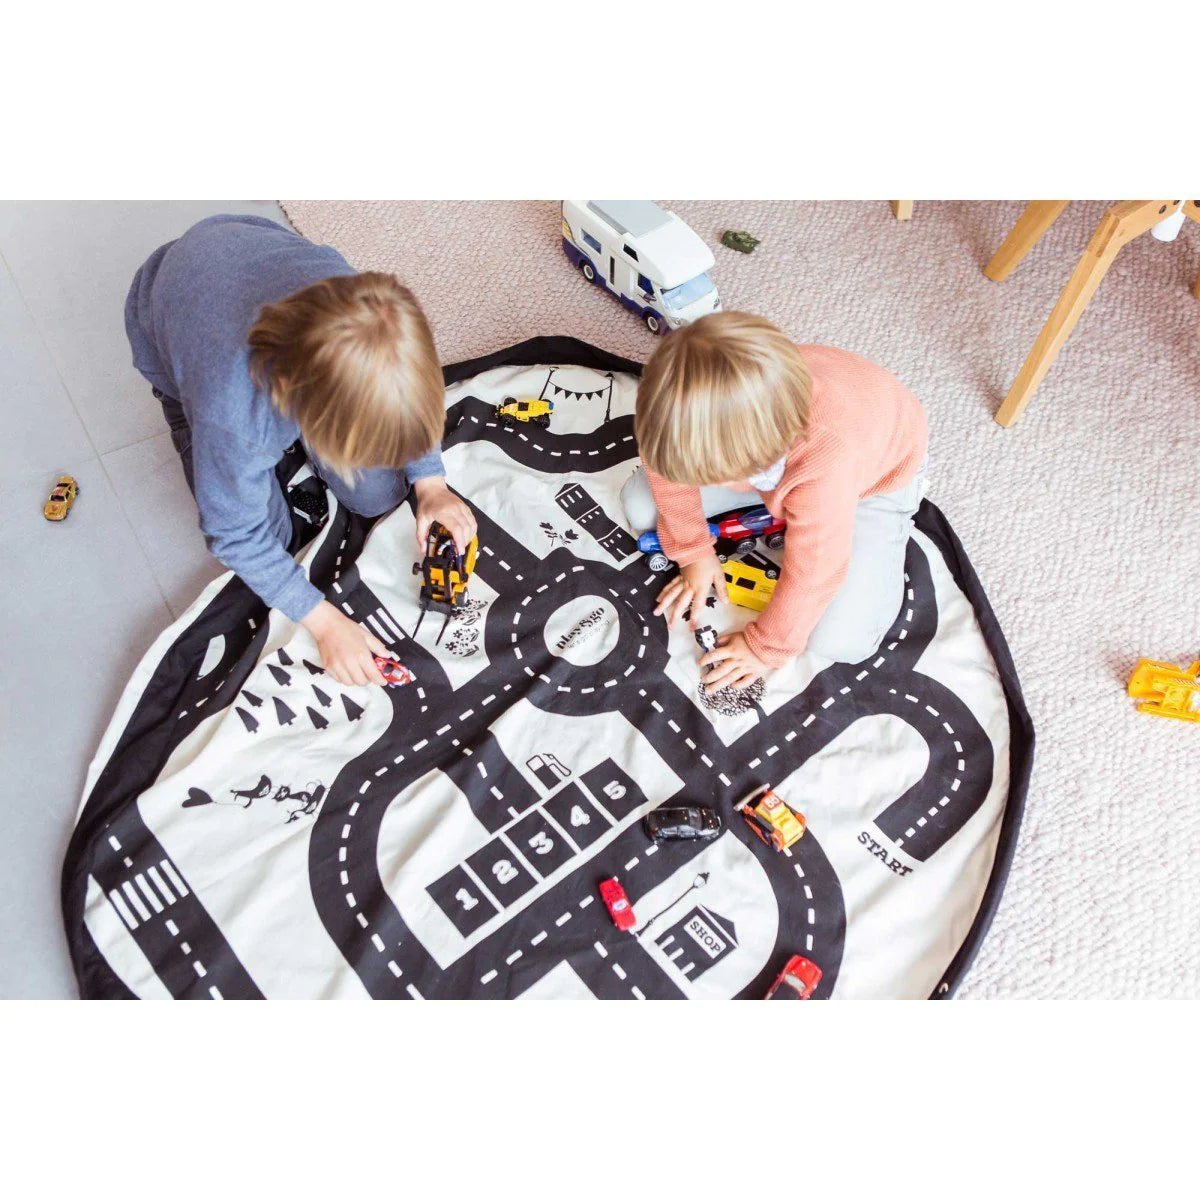 LEGO Storage Mat  Play Pouch Australia